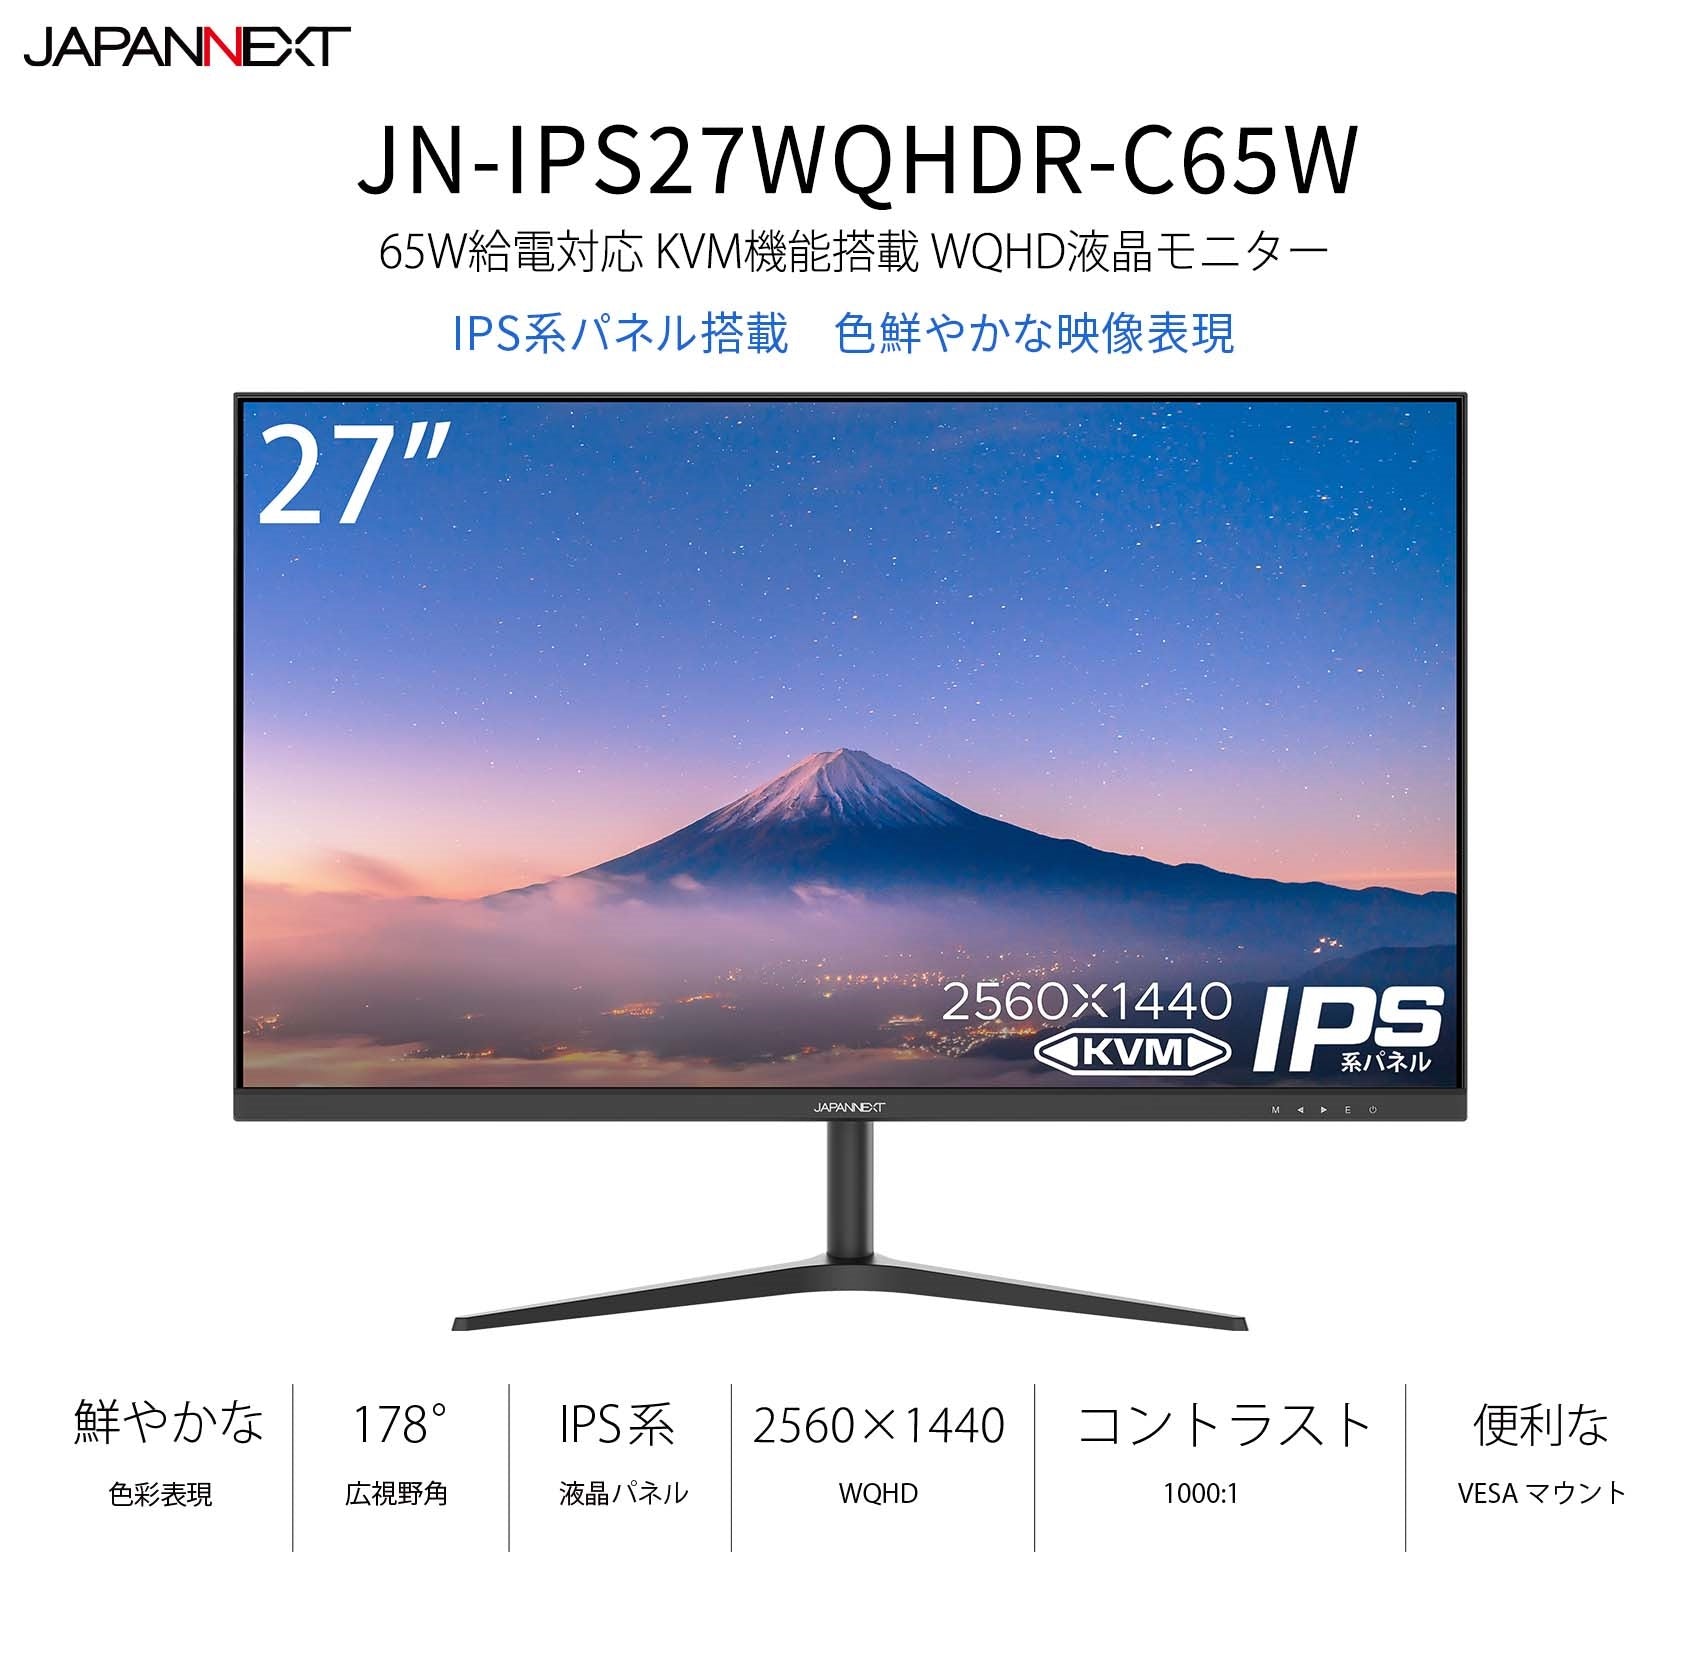 JAPANNEXT IPSパネル搭載27インチ WQHD解像度USB-C給電対応液晶モニターJN-IPS27WQHDR-C65W HDMI DP  USB-C(65W給電) KVM機能